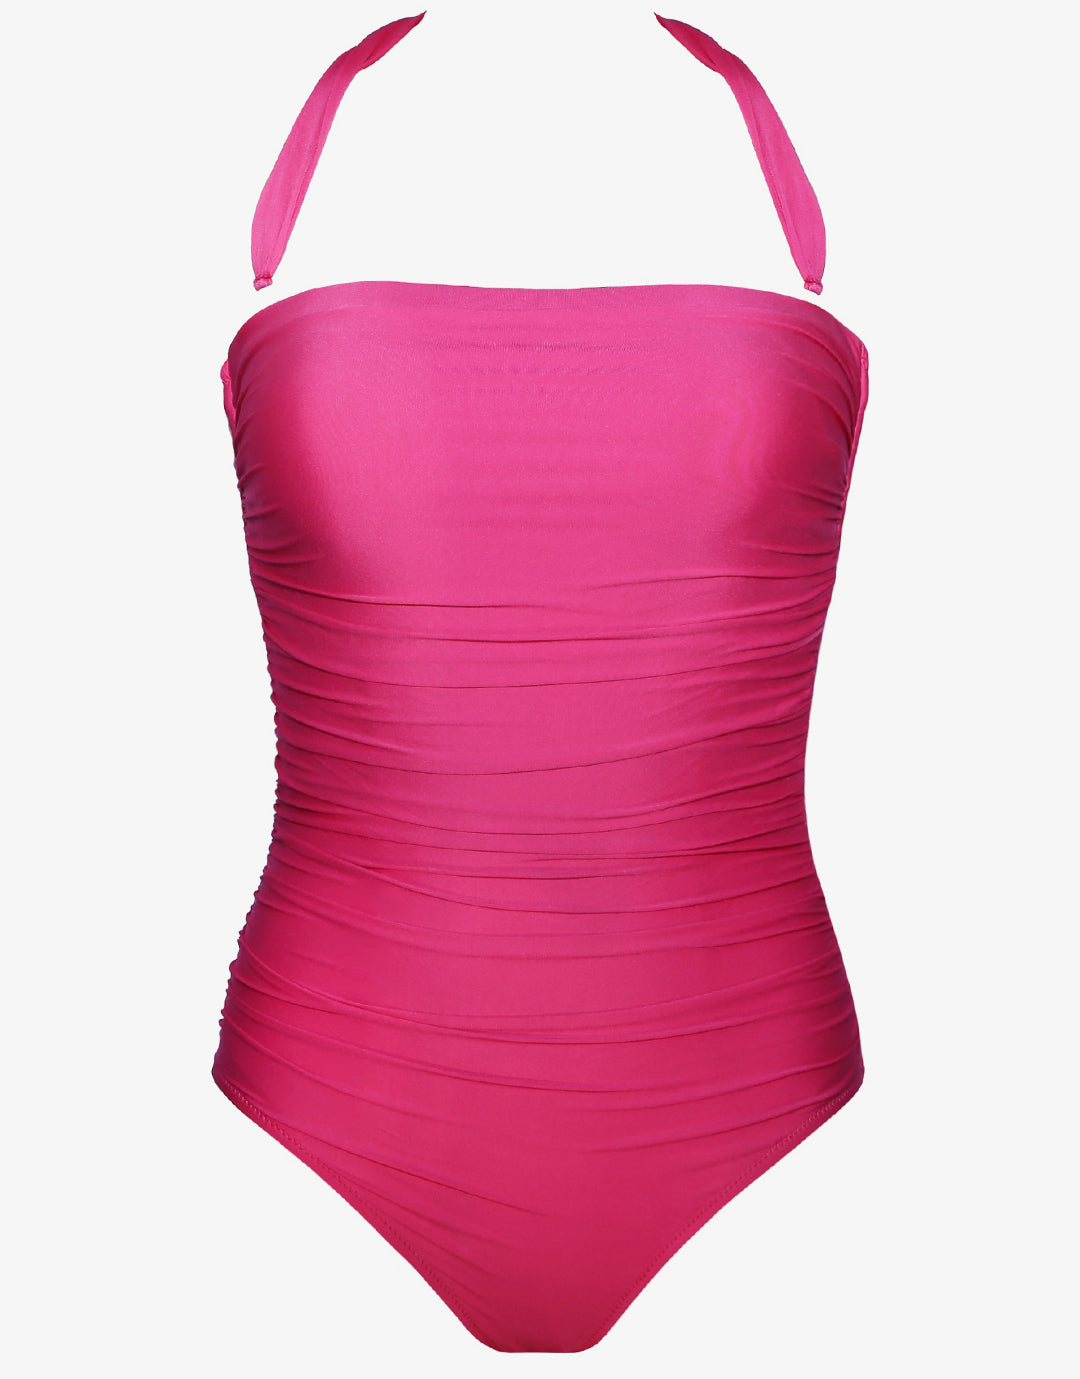 Ceylan Bandeau Swimsuit - Pink - Simply Beach UK